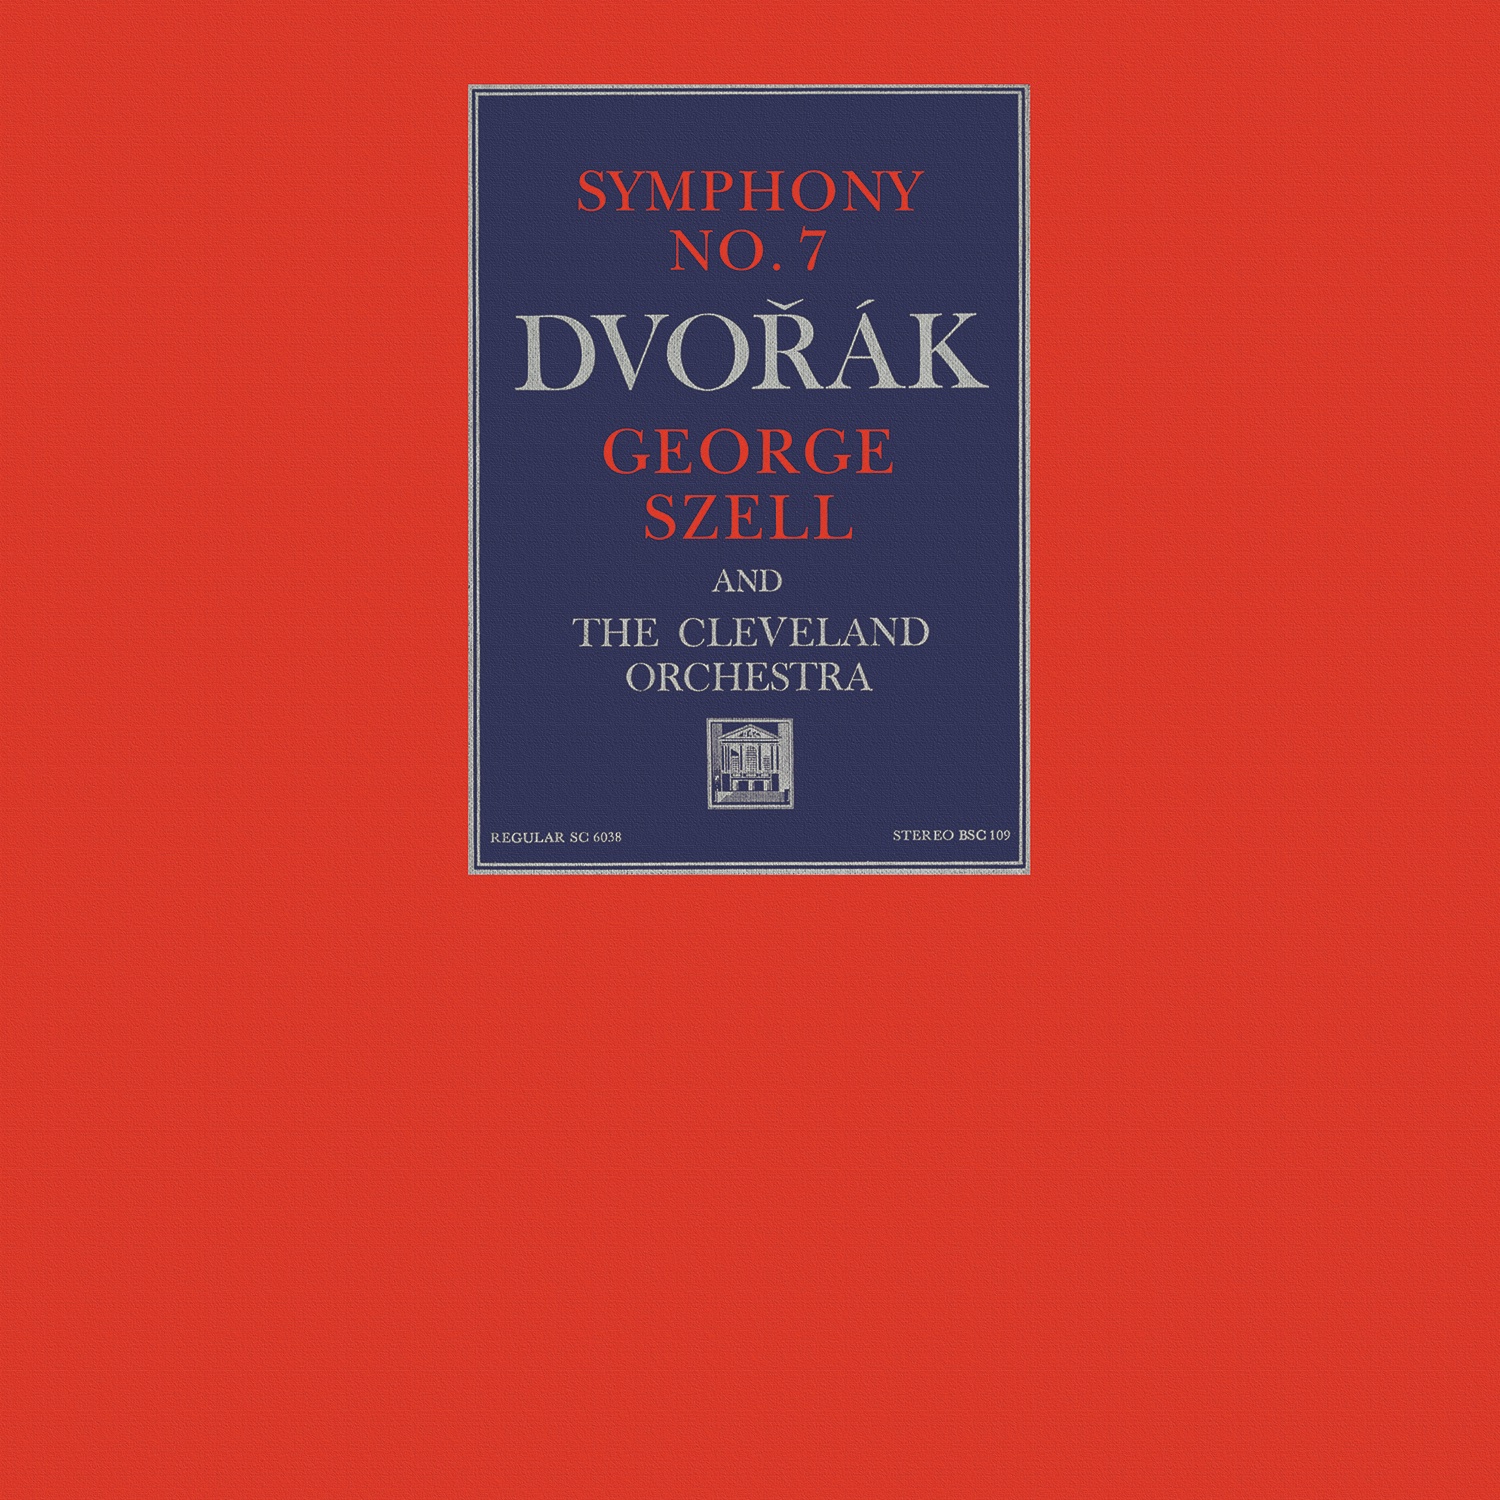 George Szell - Dvorák: Symphony No. 7 & Carnival Overture -  Smetana: The Moldau, Bartered Bride and More